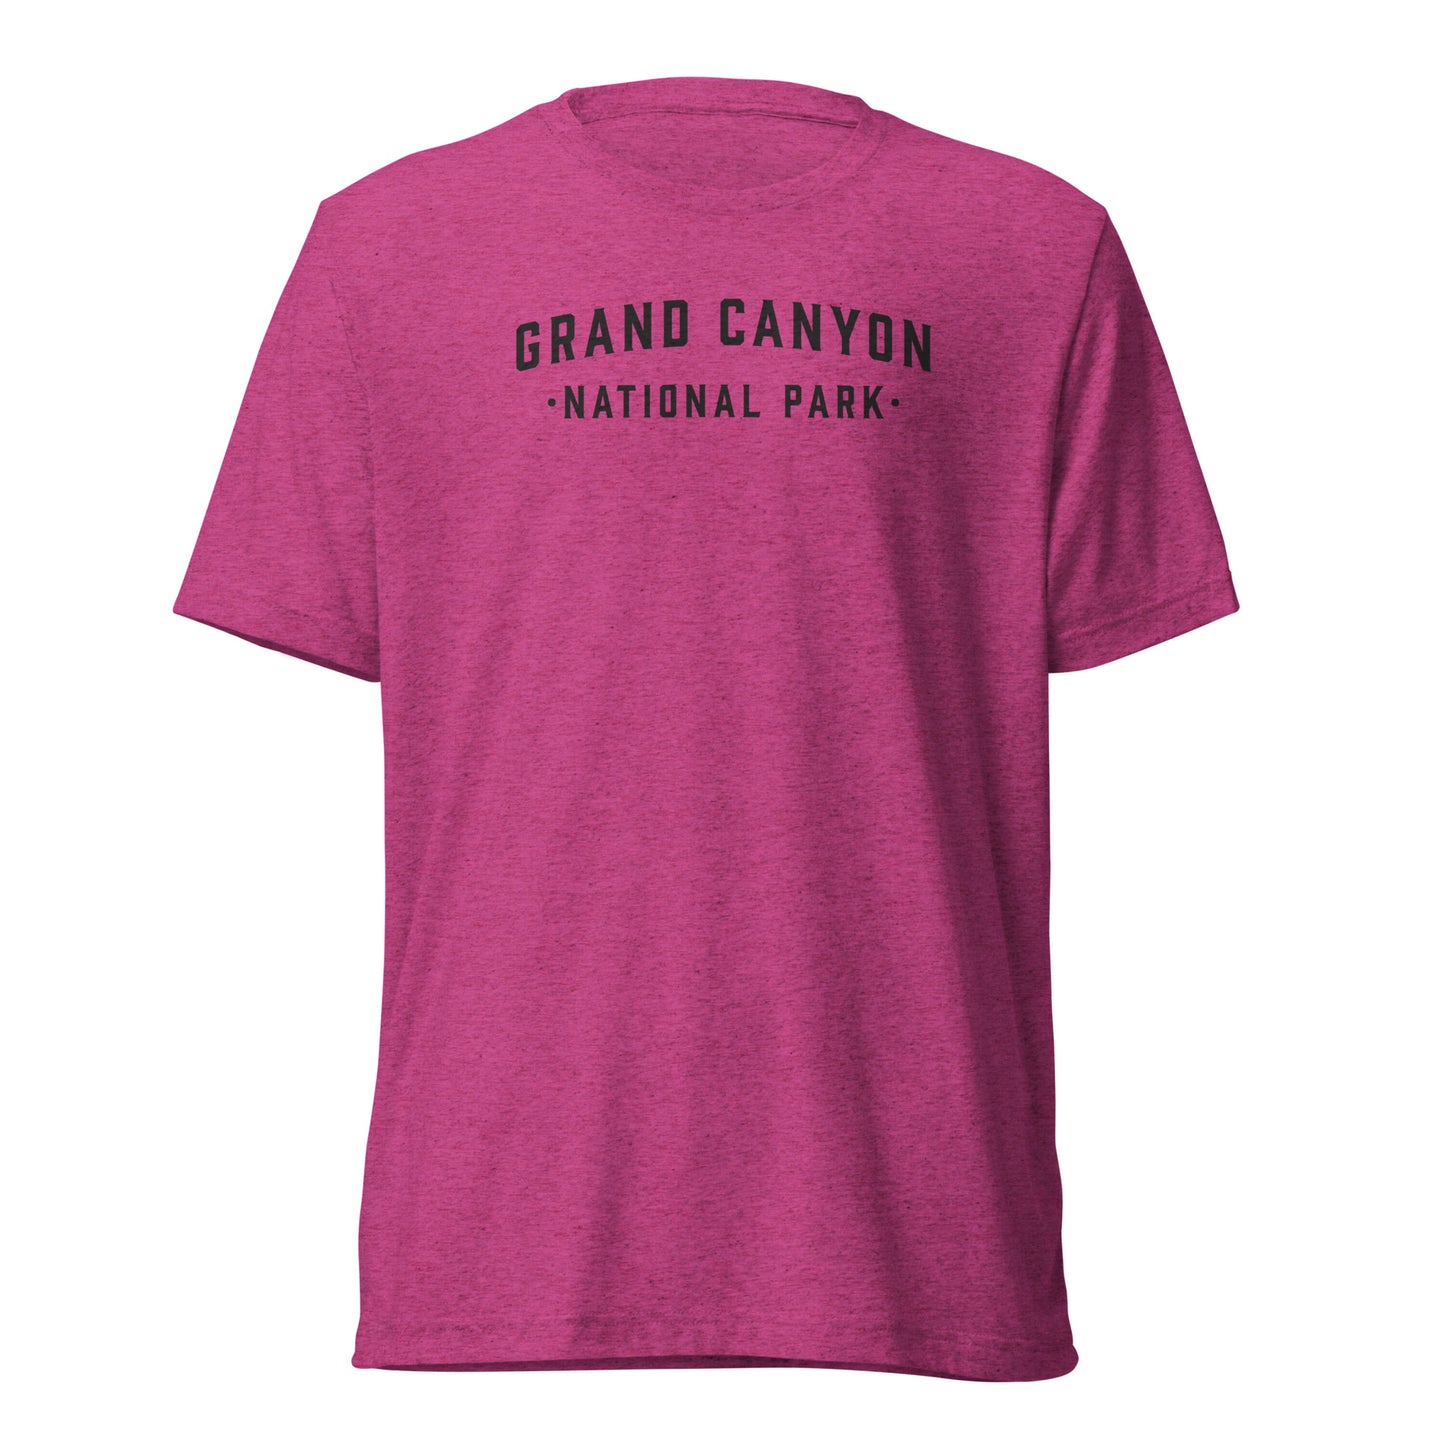 Premium Everyday Grand Canyon National Park Tee